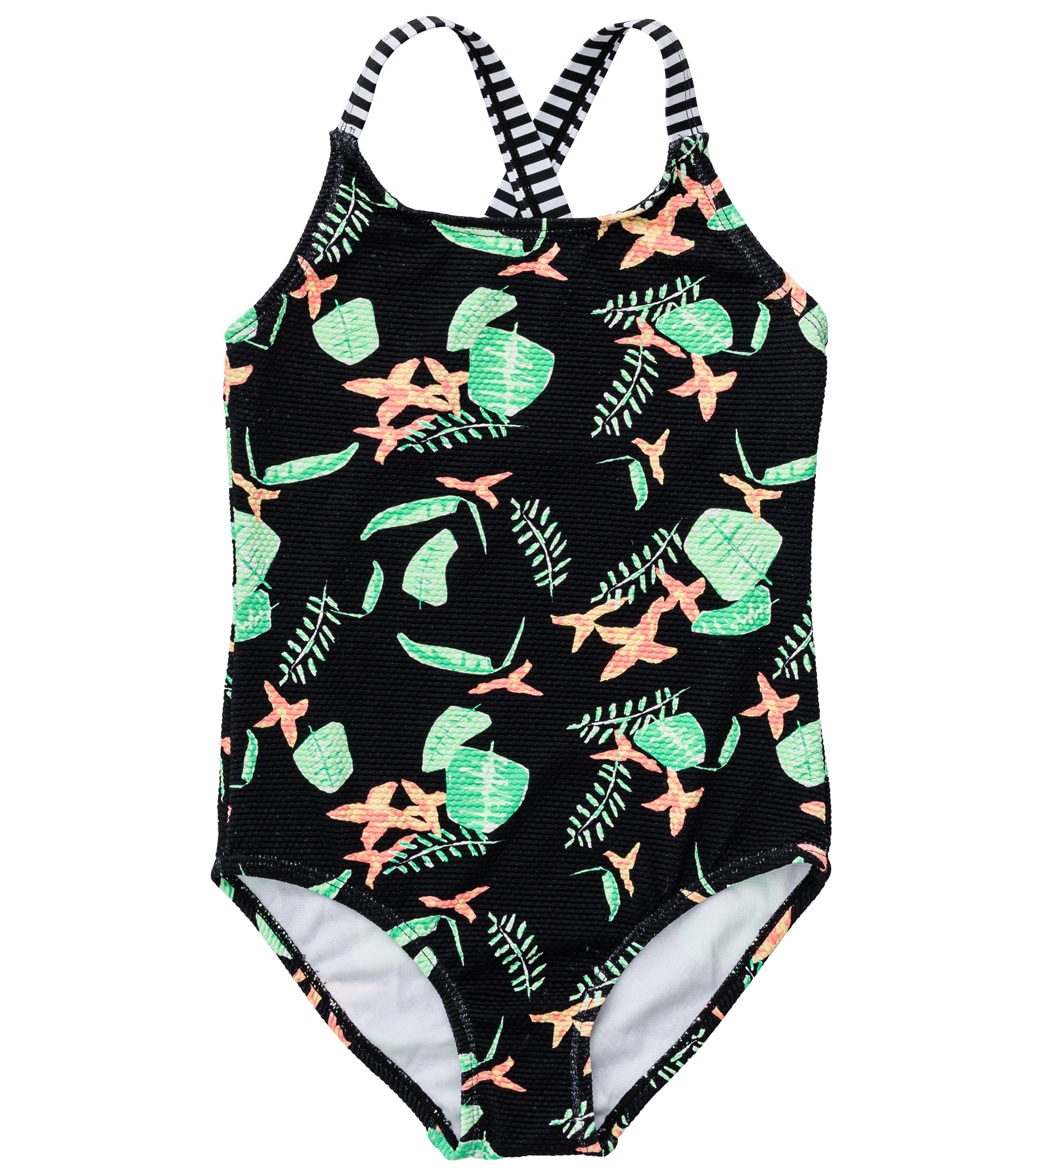 Snapper Rock Girls' Neon Rainforest Sustainable X Back Swimsuit - Black 10 Elastane/Polyamide - Swimoutlet.com